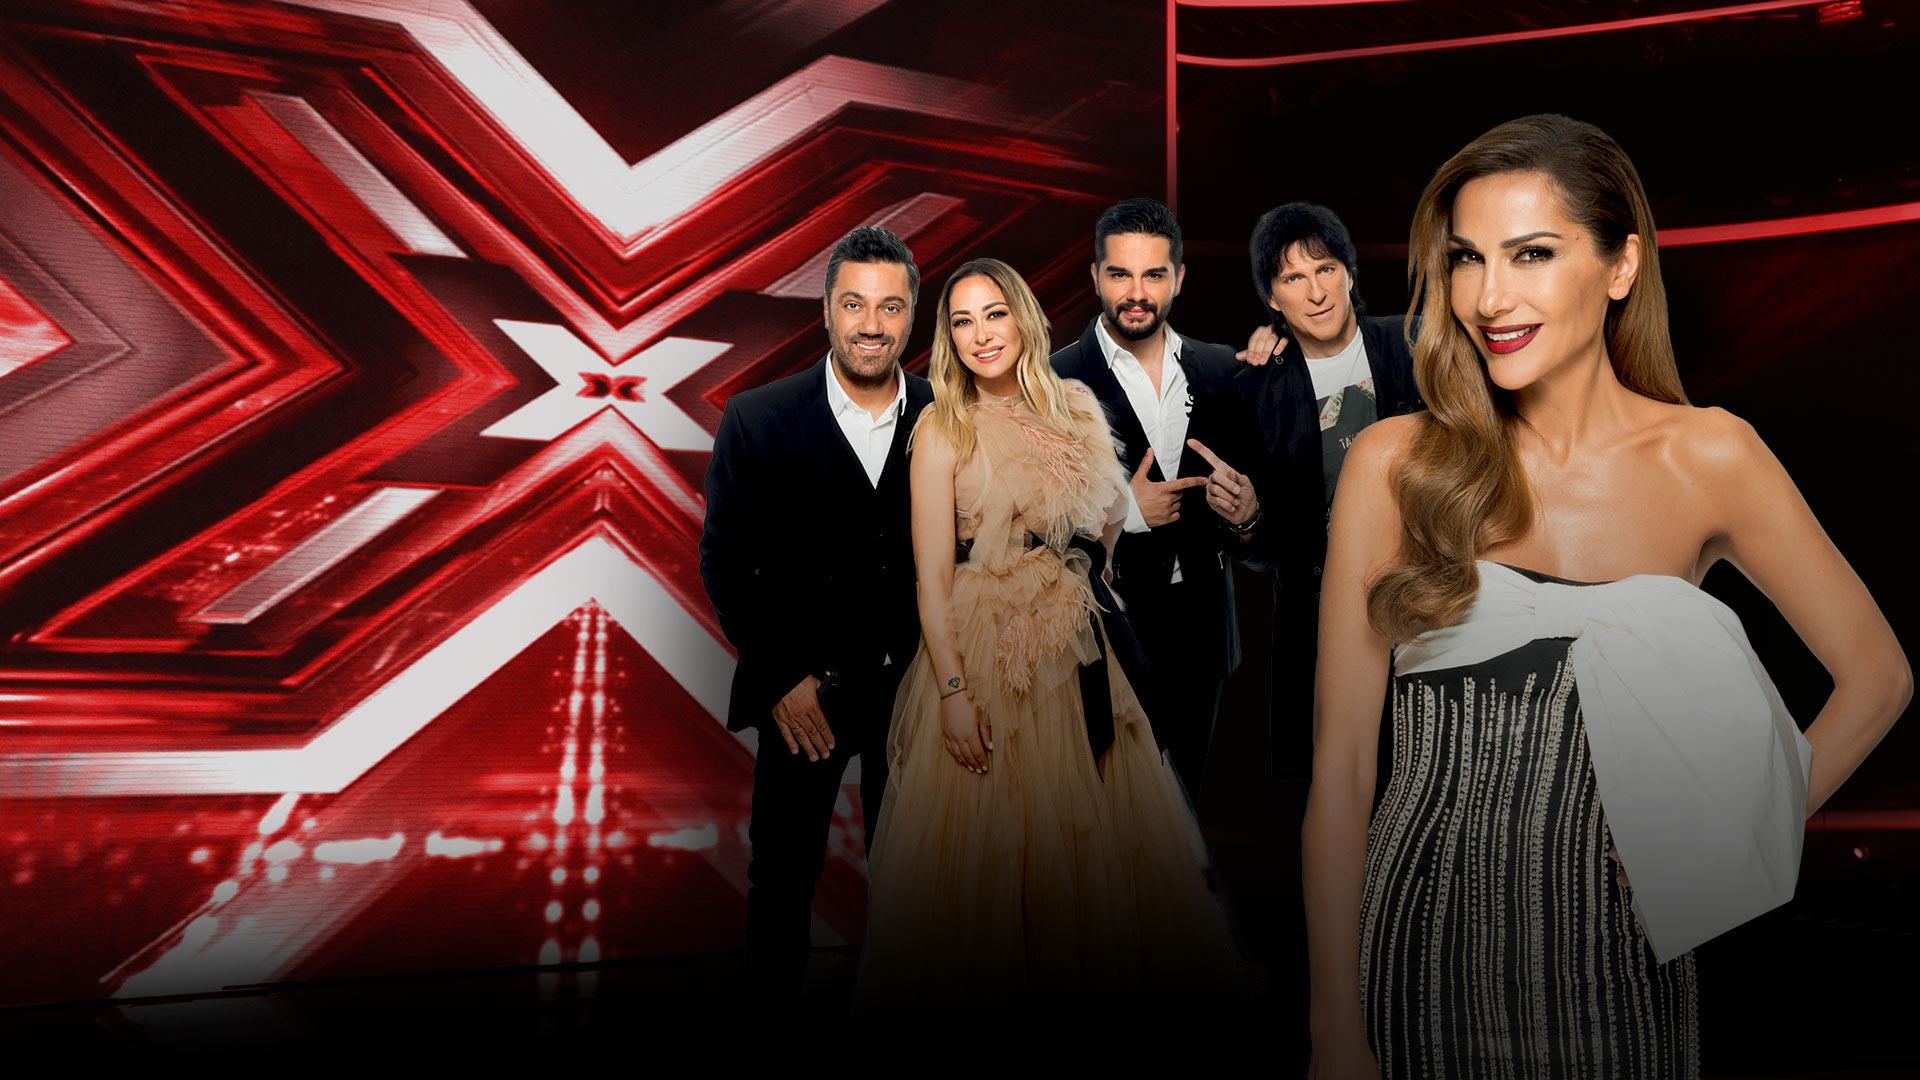 X-Factor – Δέσποινα Βανδή: Τι είπε για τον Γιώργο Καπουτζίδη στο πλατό της εκπομπής; (βίντεο)